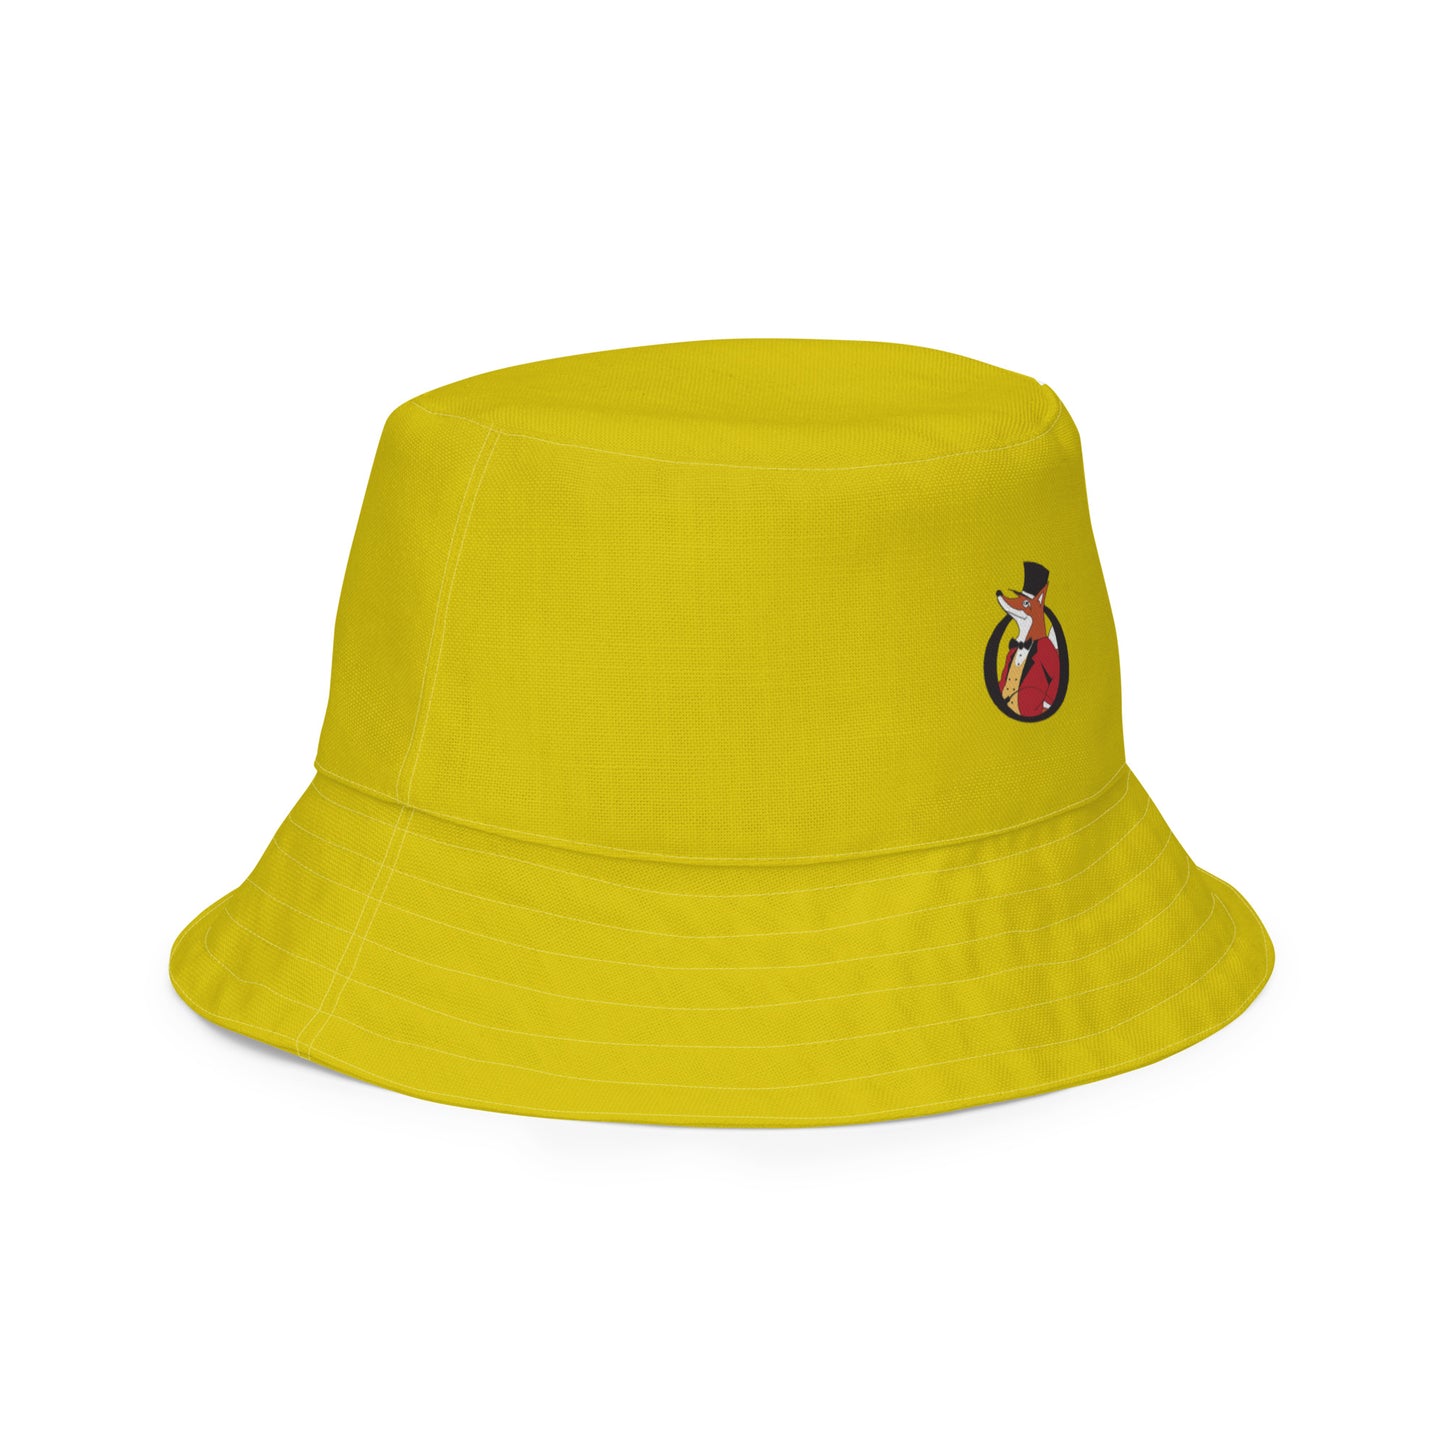 Snooty Fox Art Reversible Bucket Hat - Empire Yellow / Leak Green